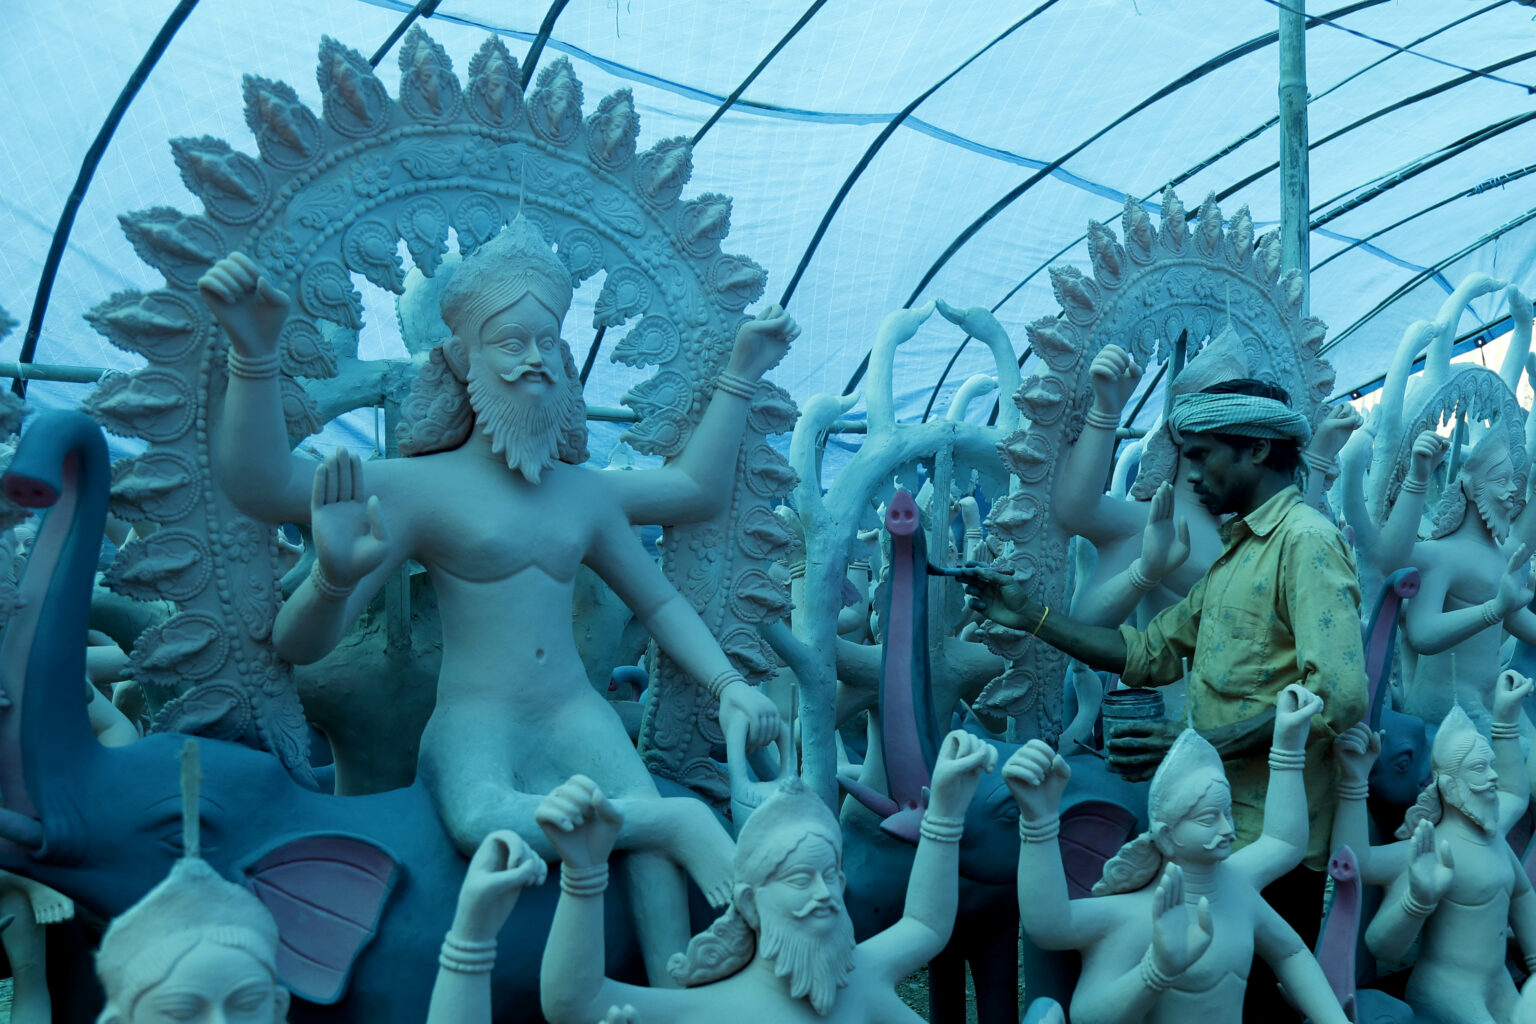 Busy crafting Vishwakarma idols